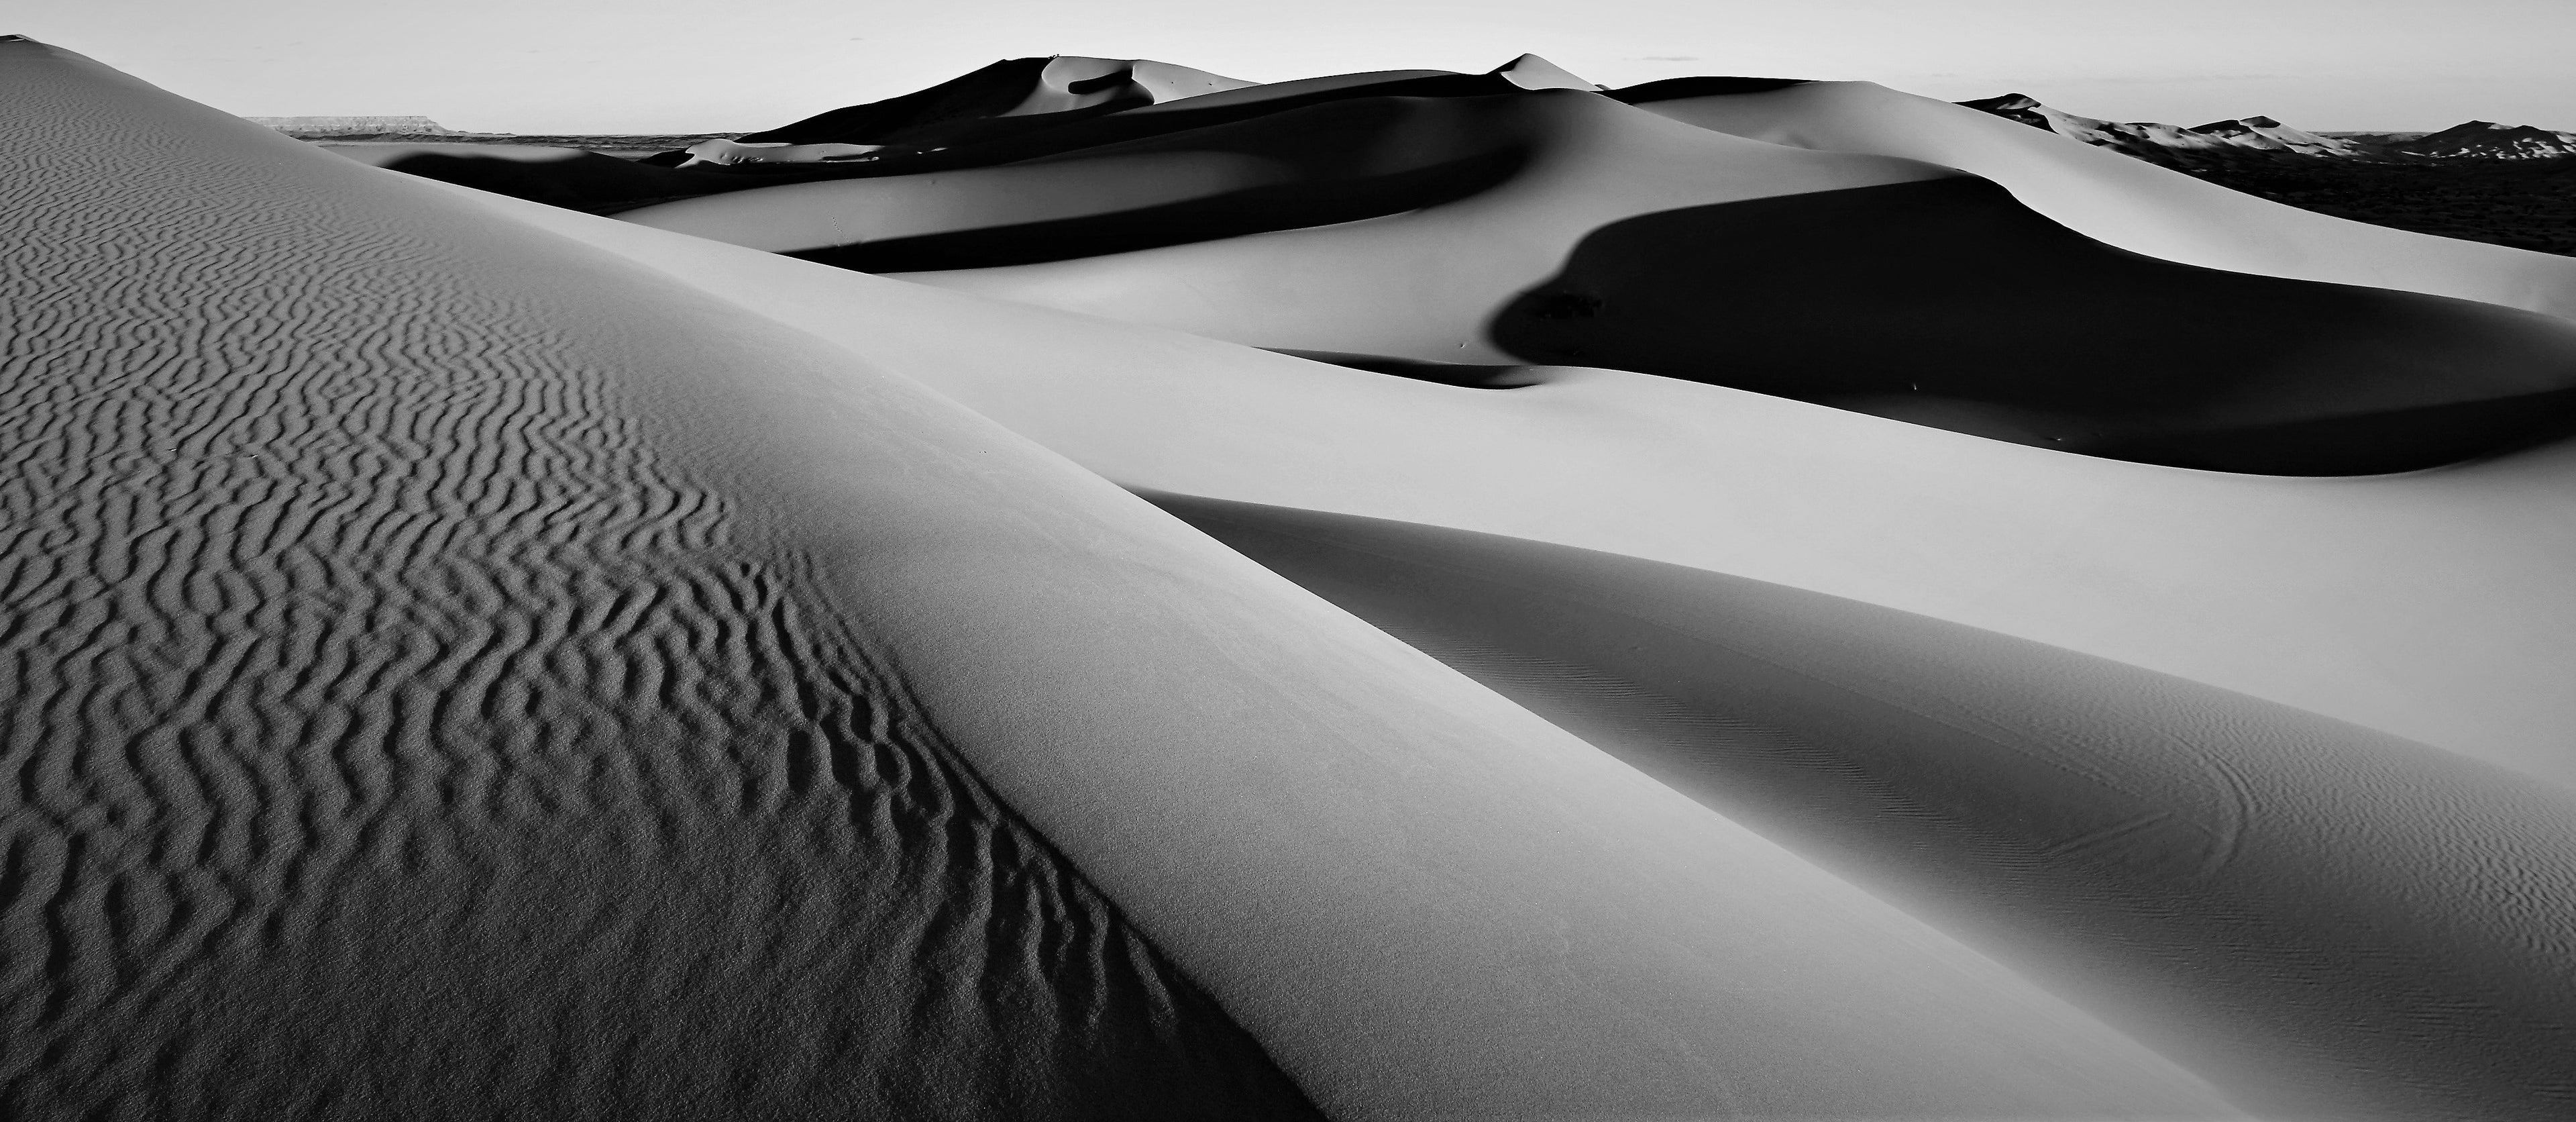 Sand dune image